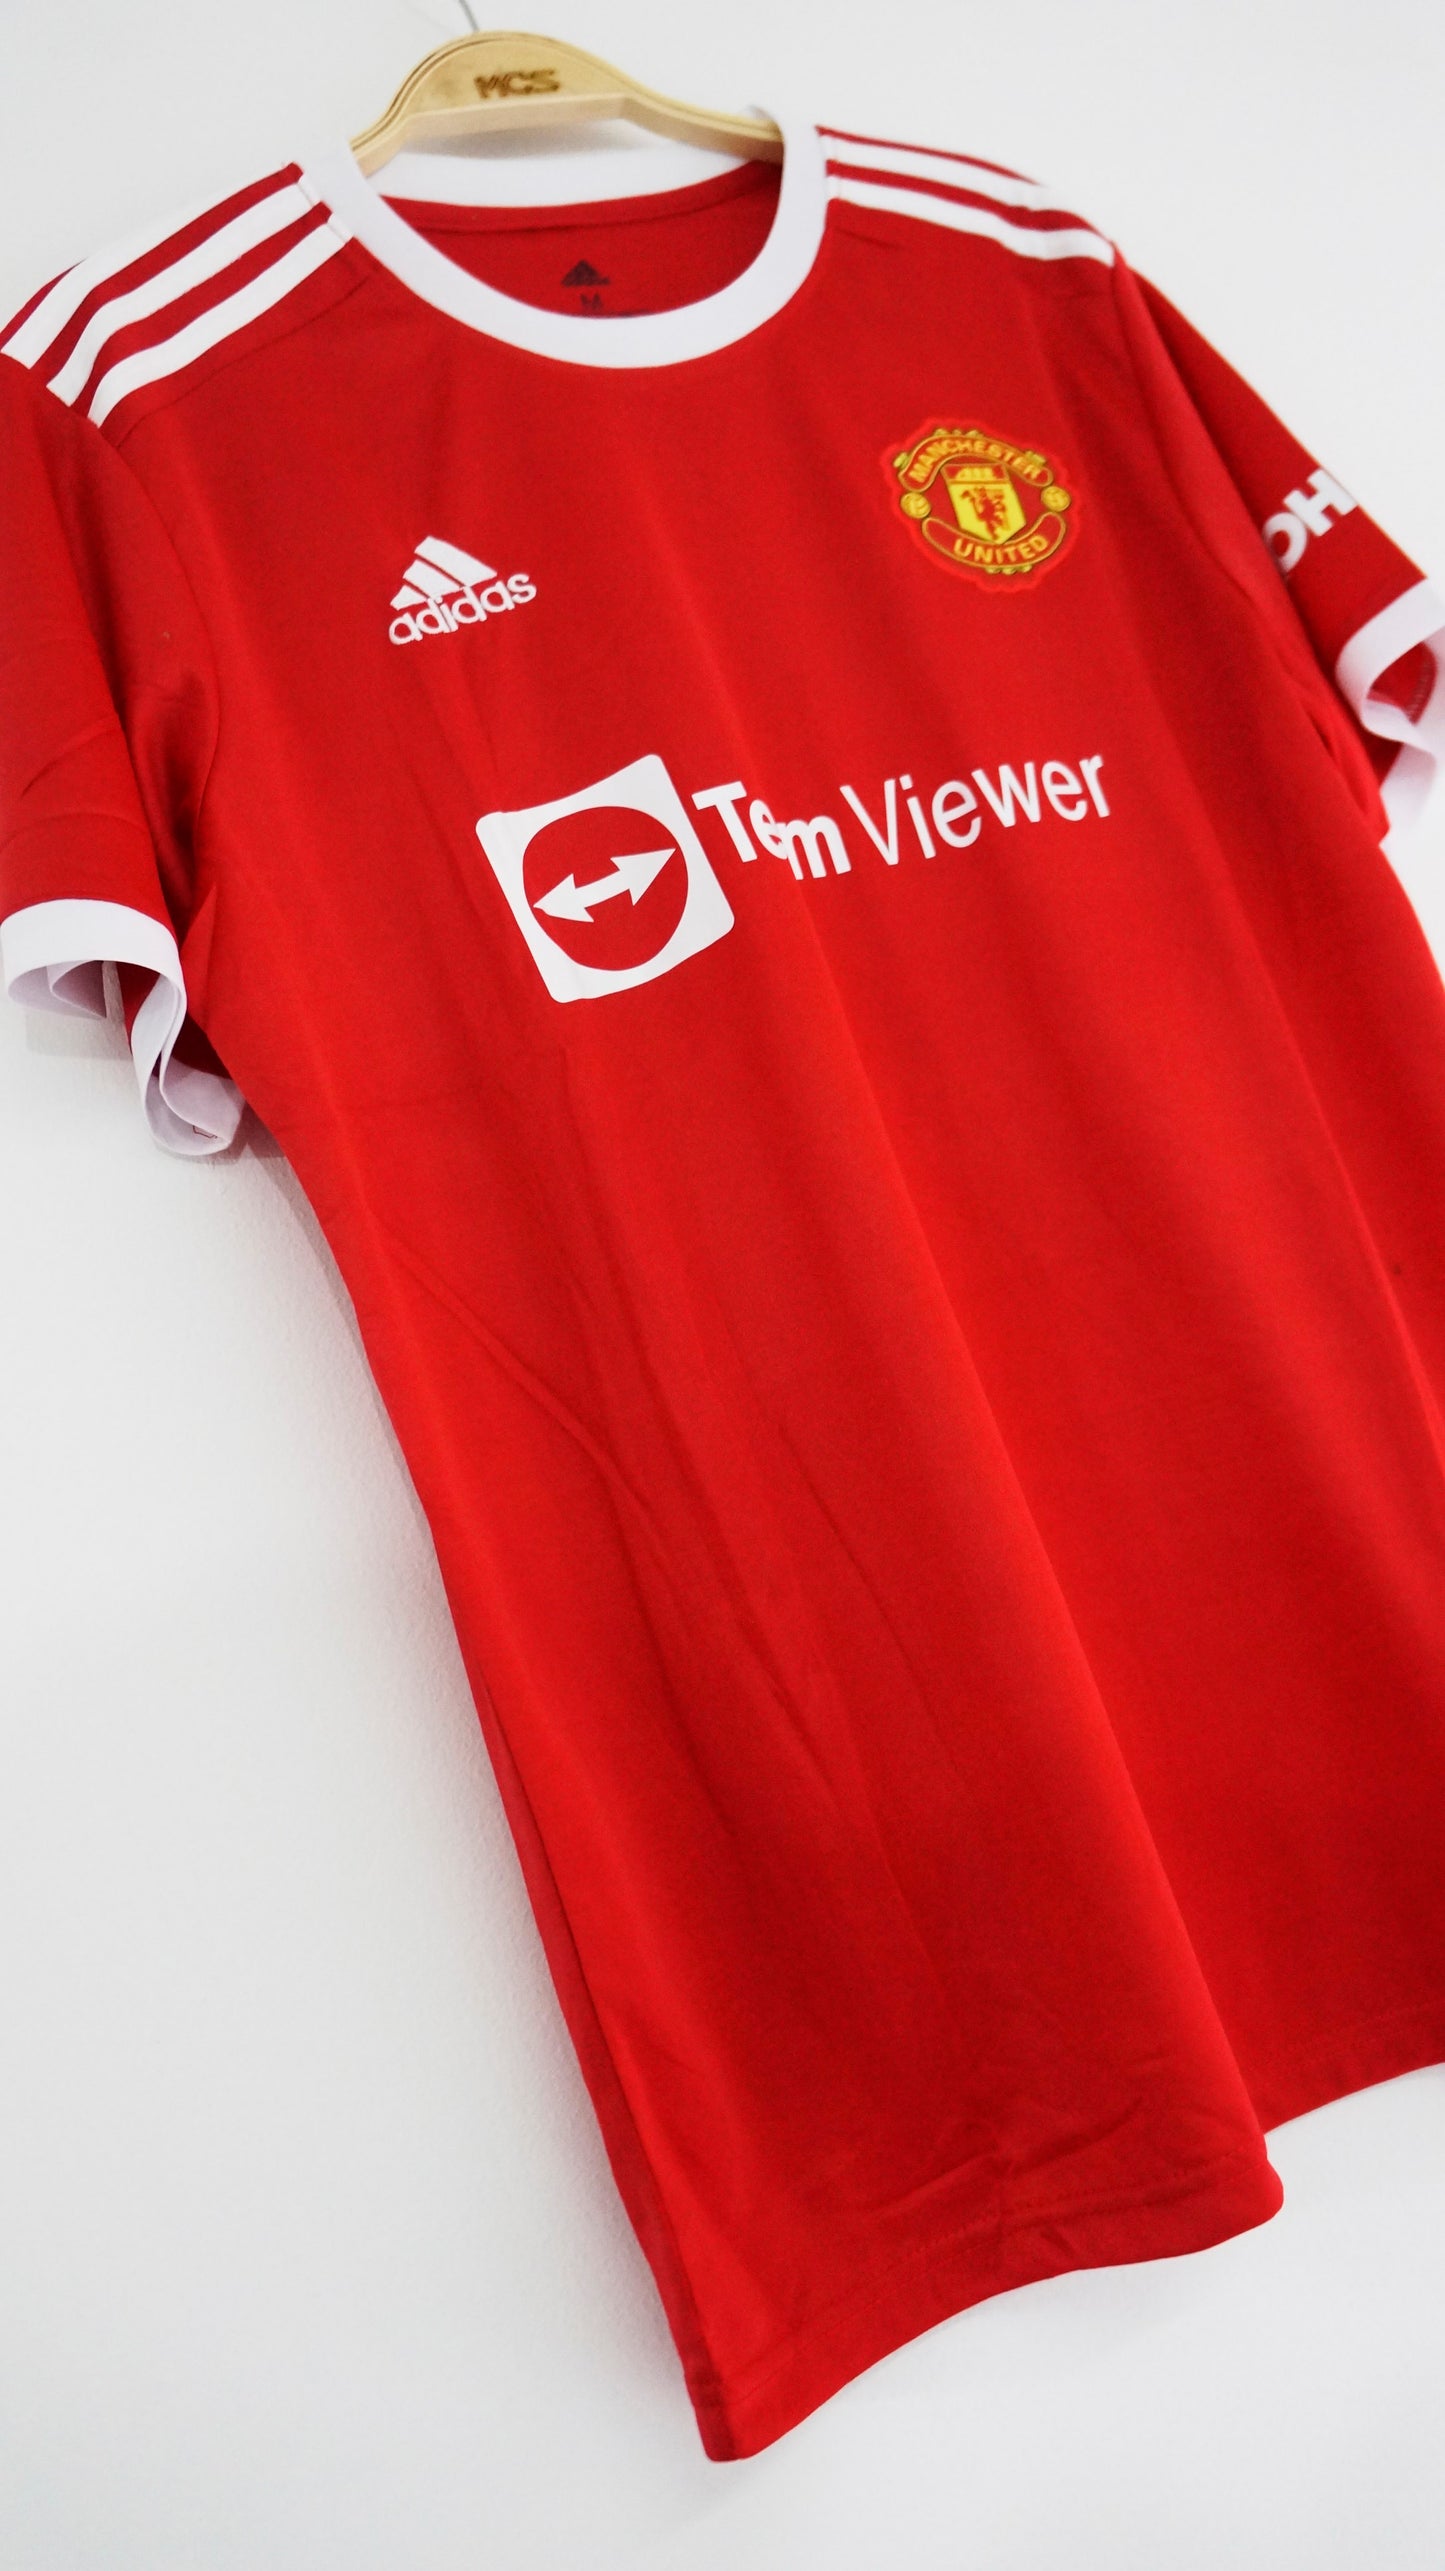 Camiseta Manchester United 2021 - RONALDO -